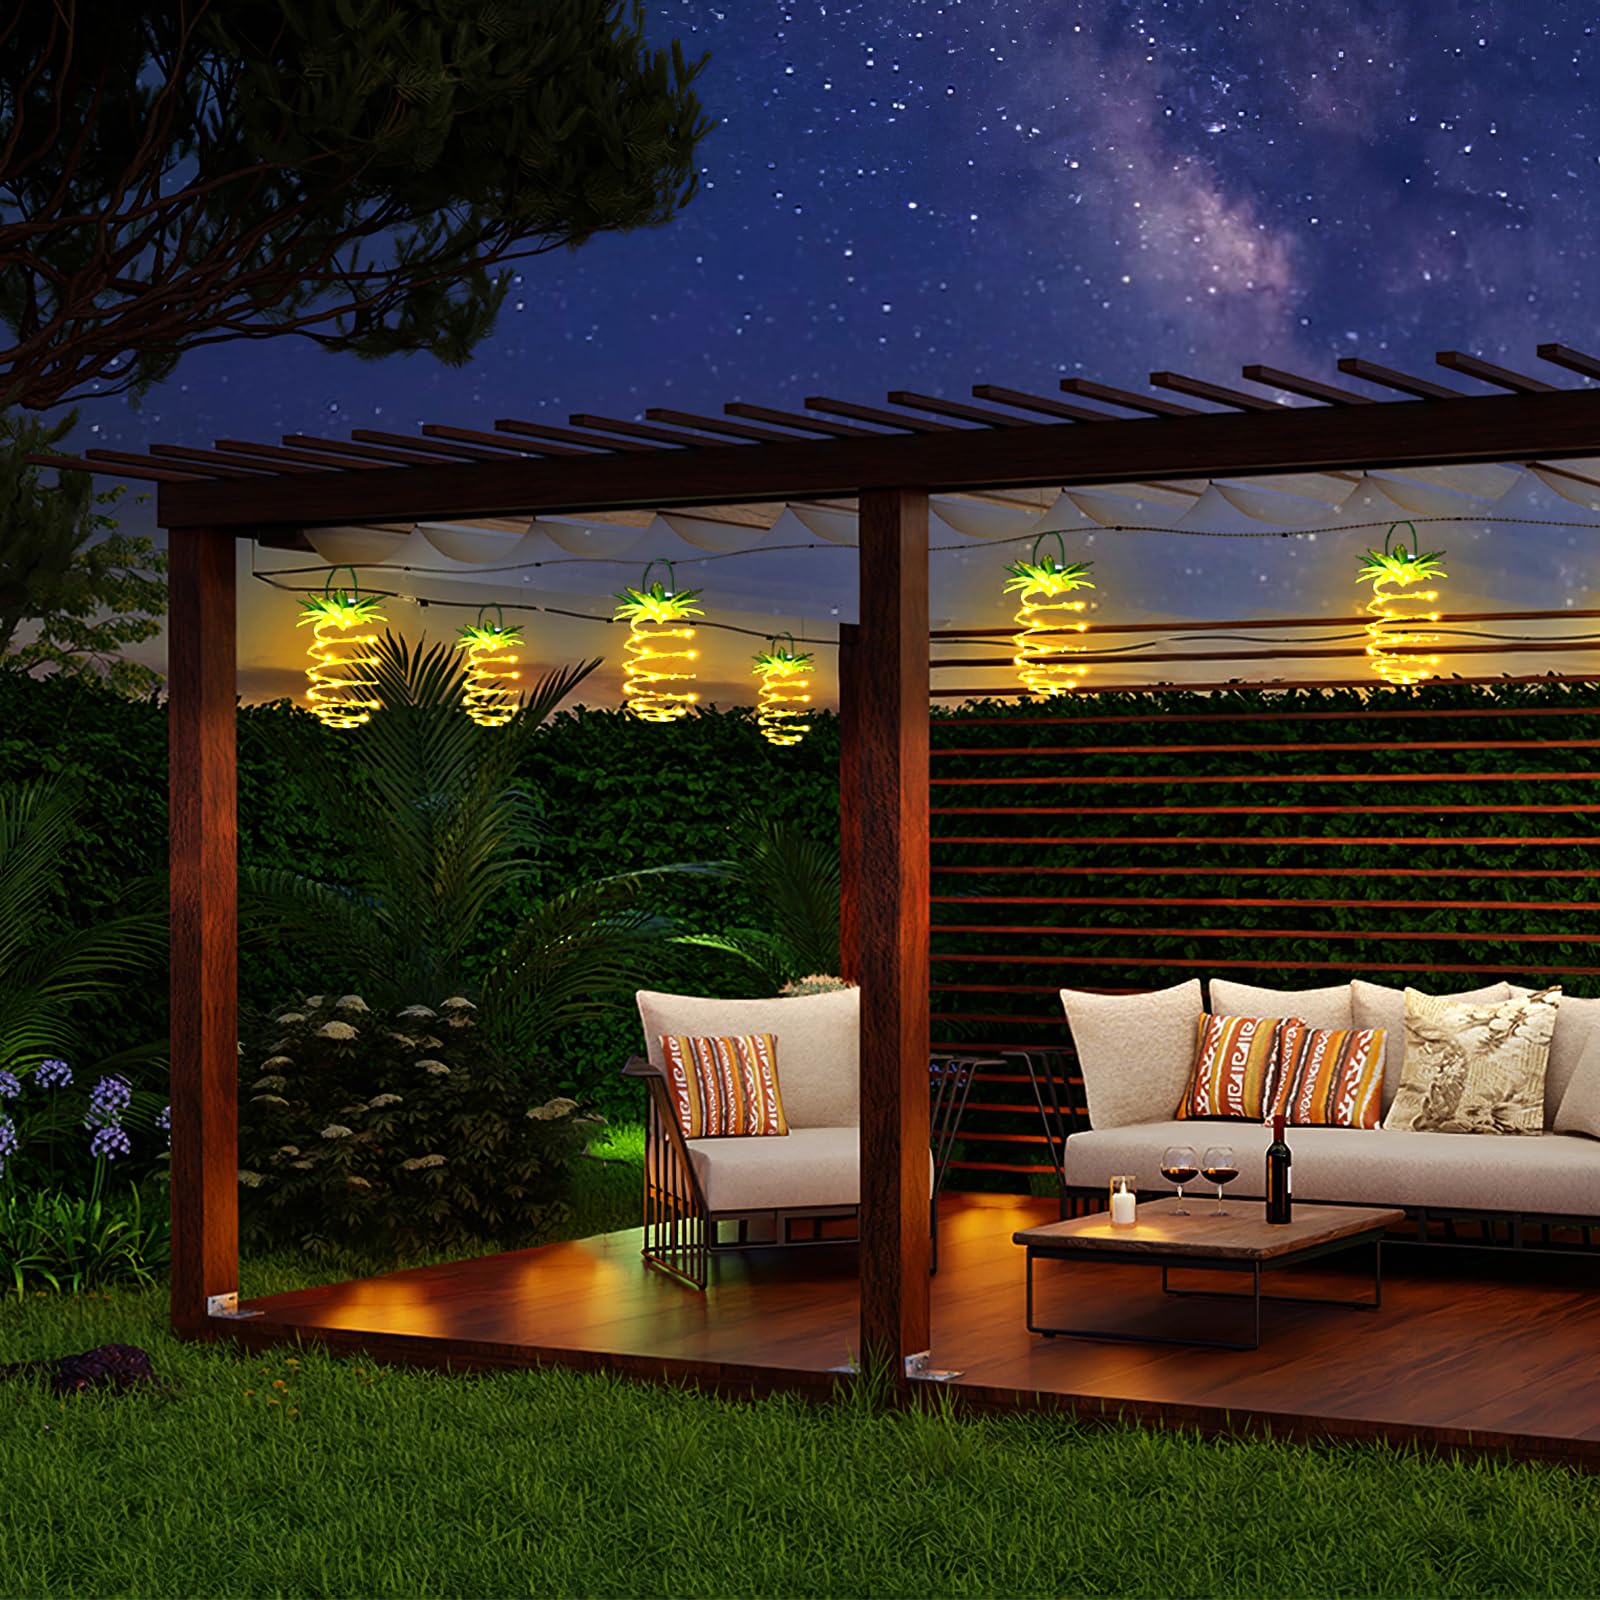 🔥Hot Sale Now 49% - Waterproof 60 LED Pineapple Decorative Solar Lights